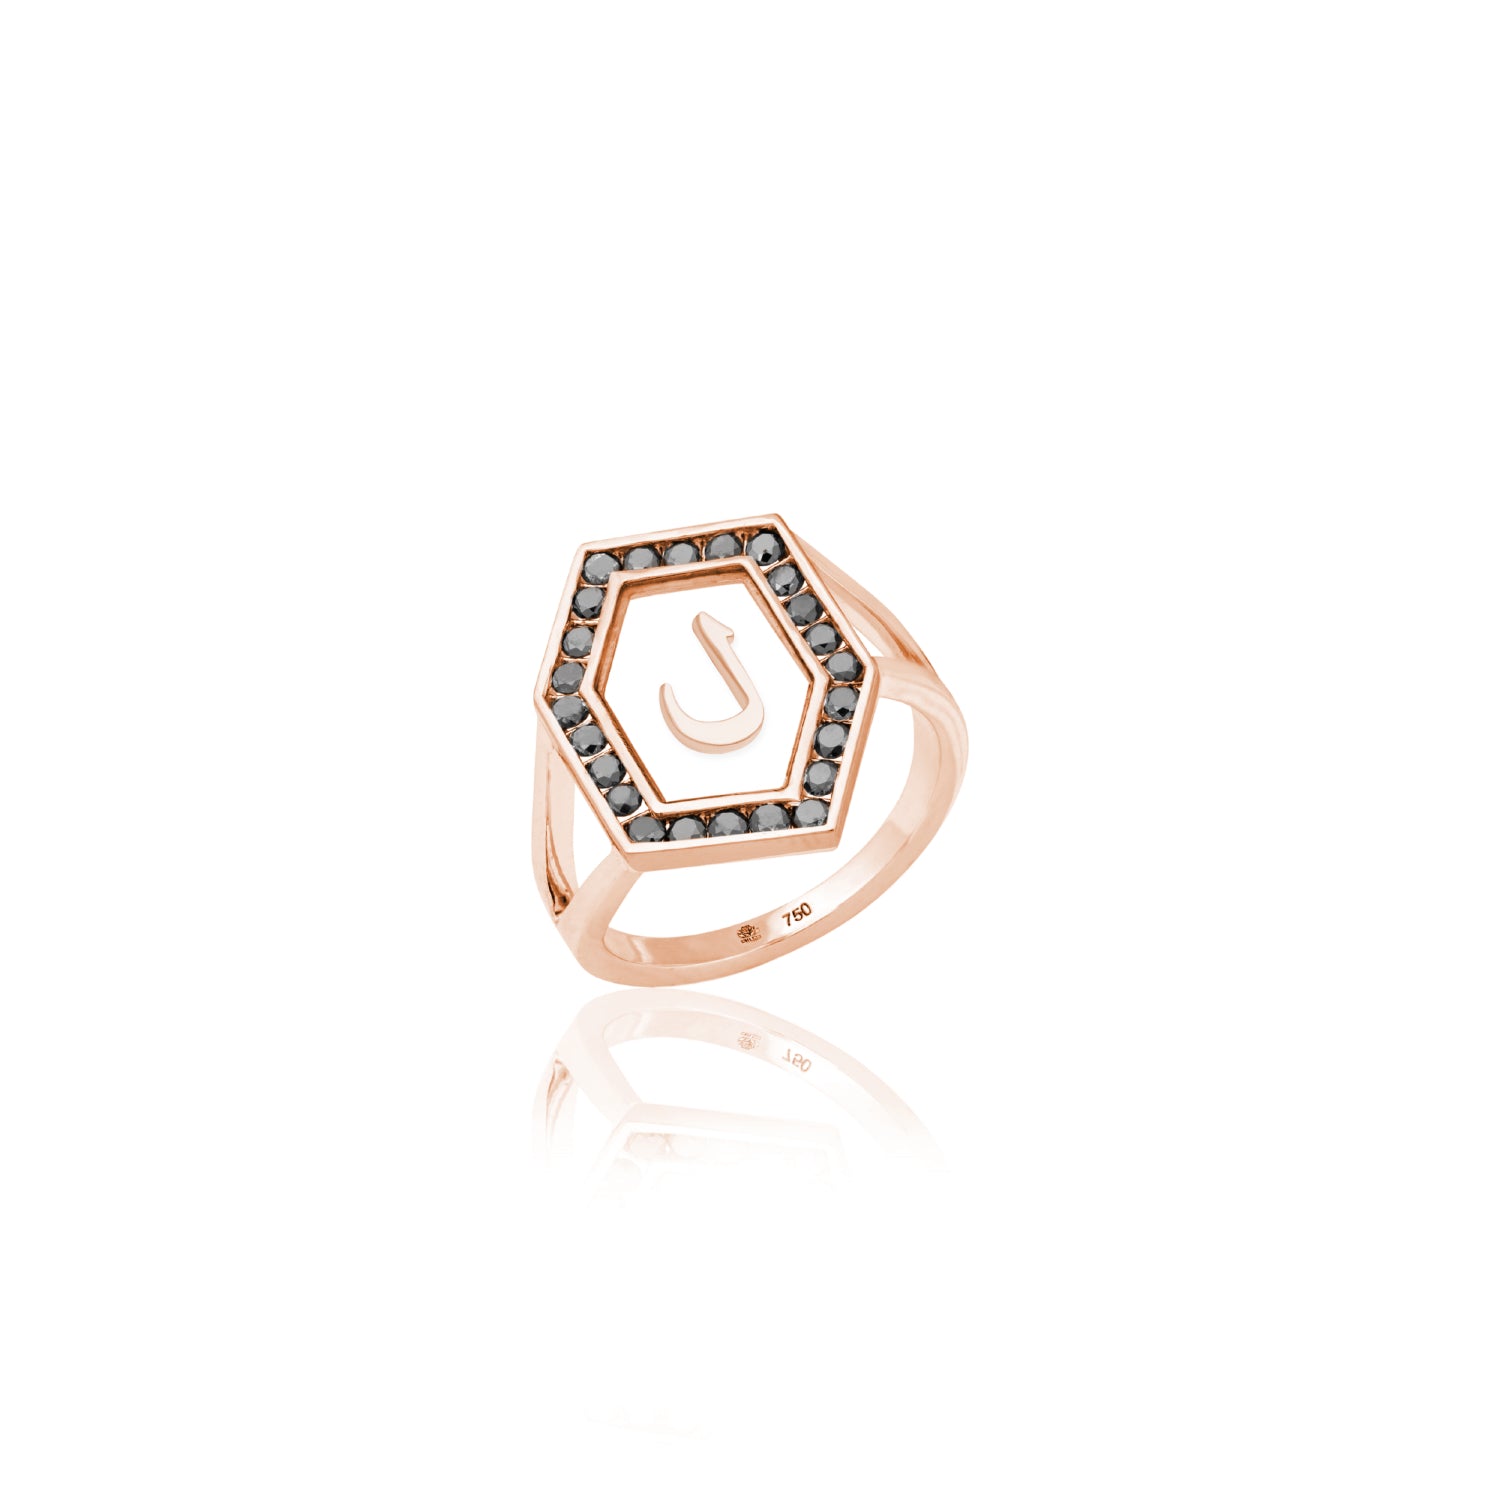 Qamoos 1.0 Letter ل Black Diamond Ring in Rose Gold